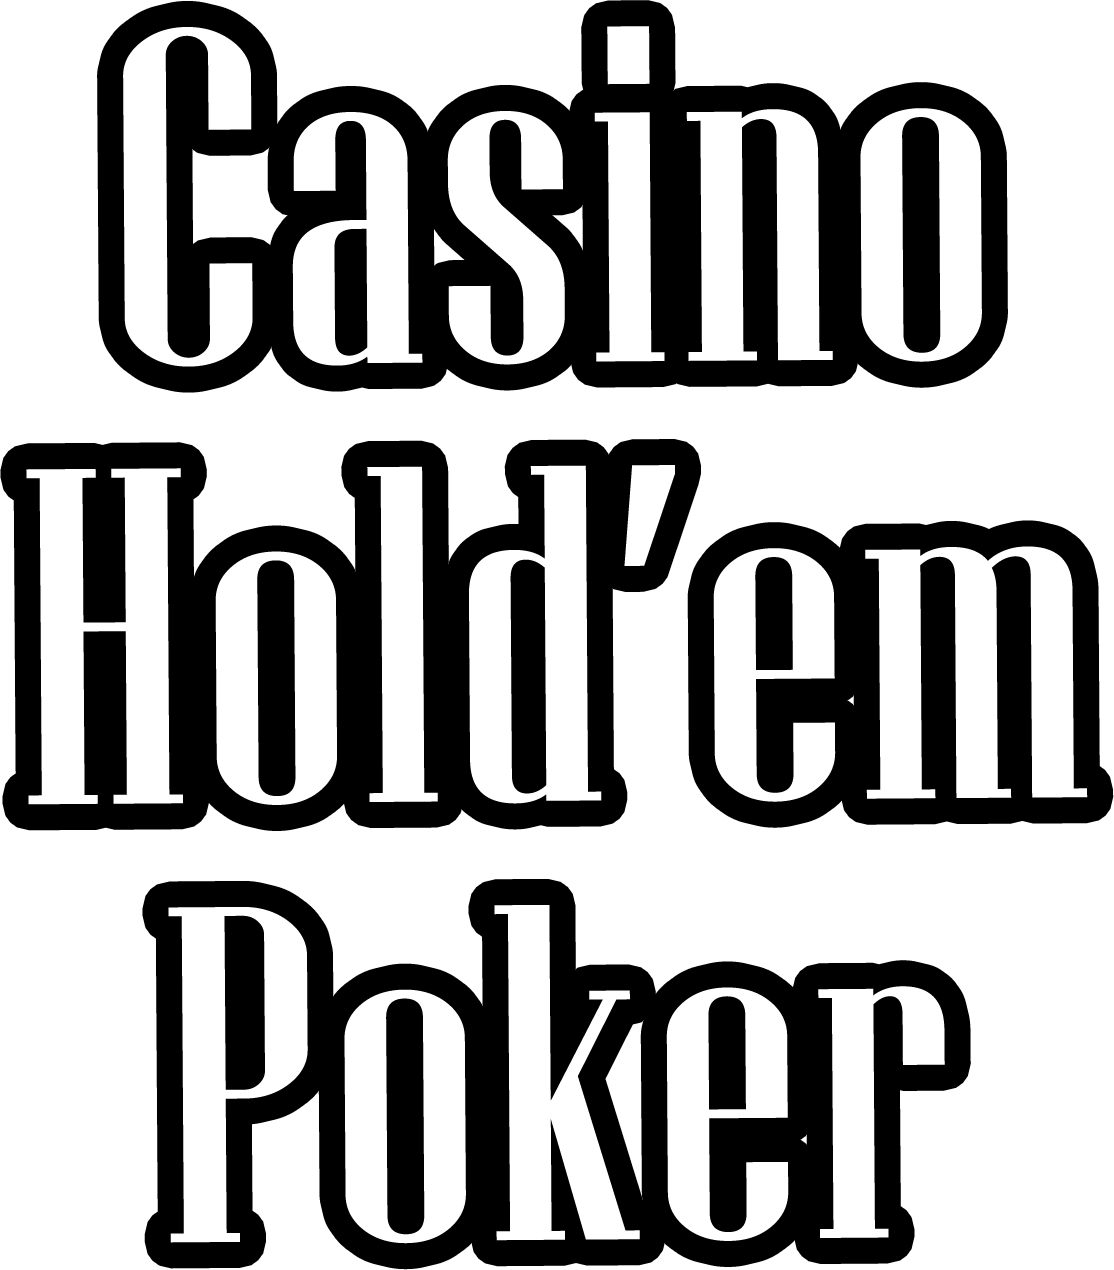 06_casino-holdem-logo-3-rows_casinoholdem.png thumbnail